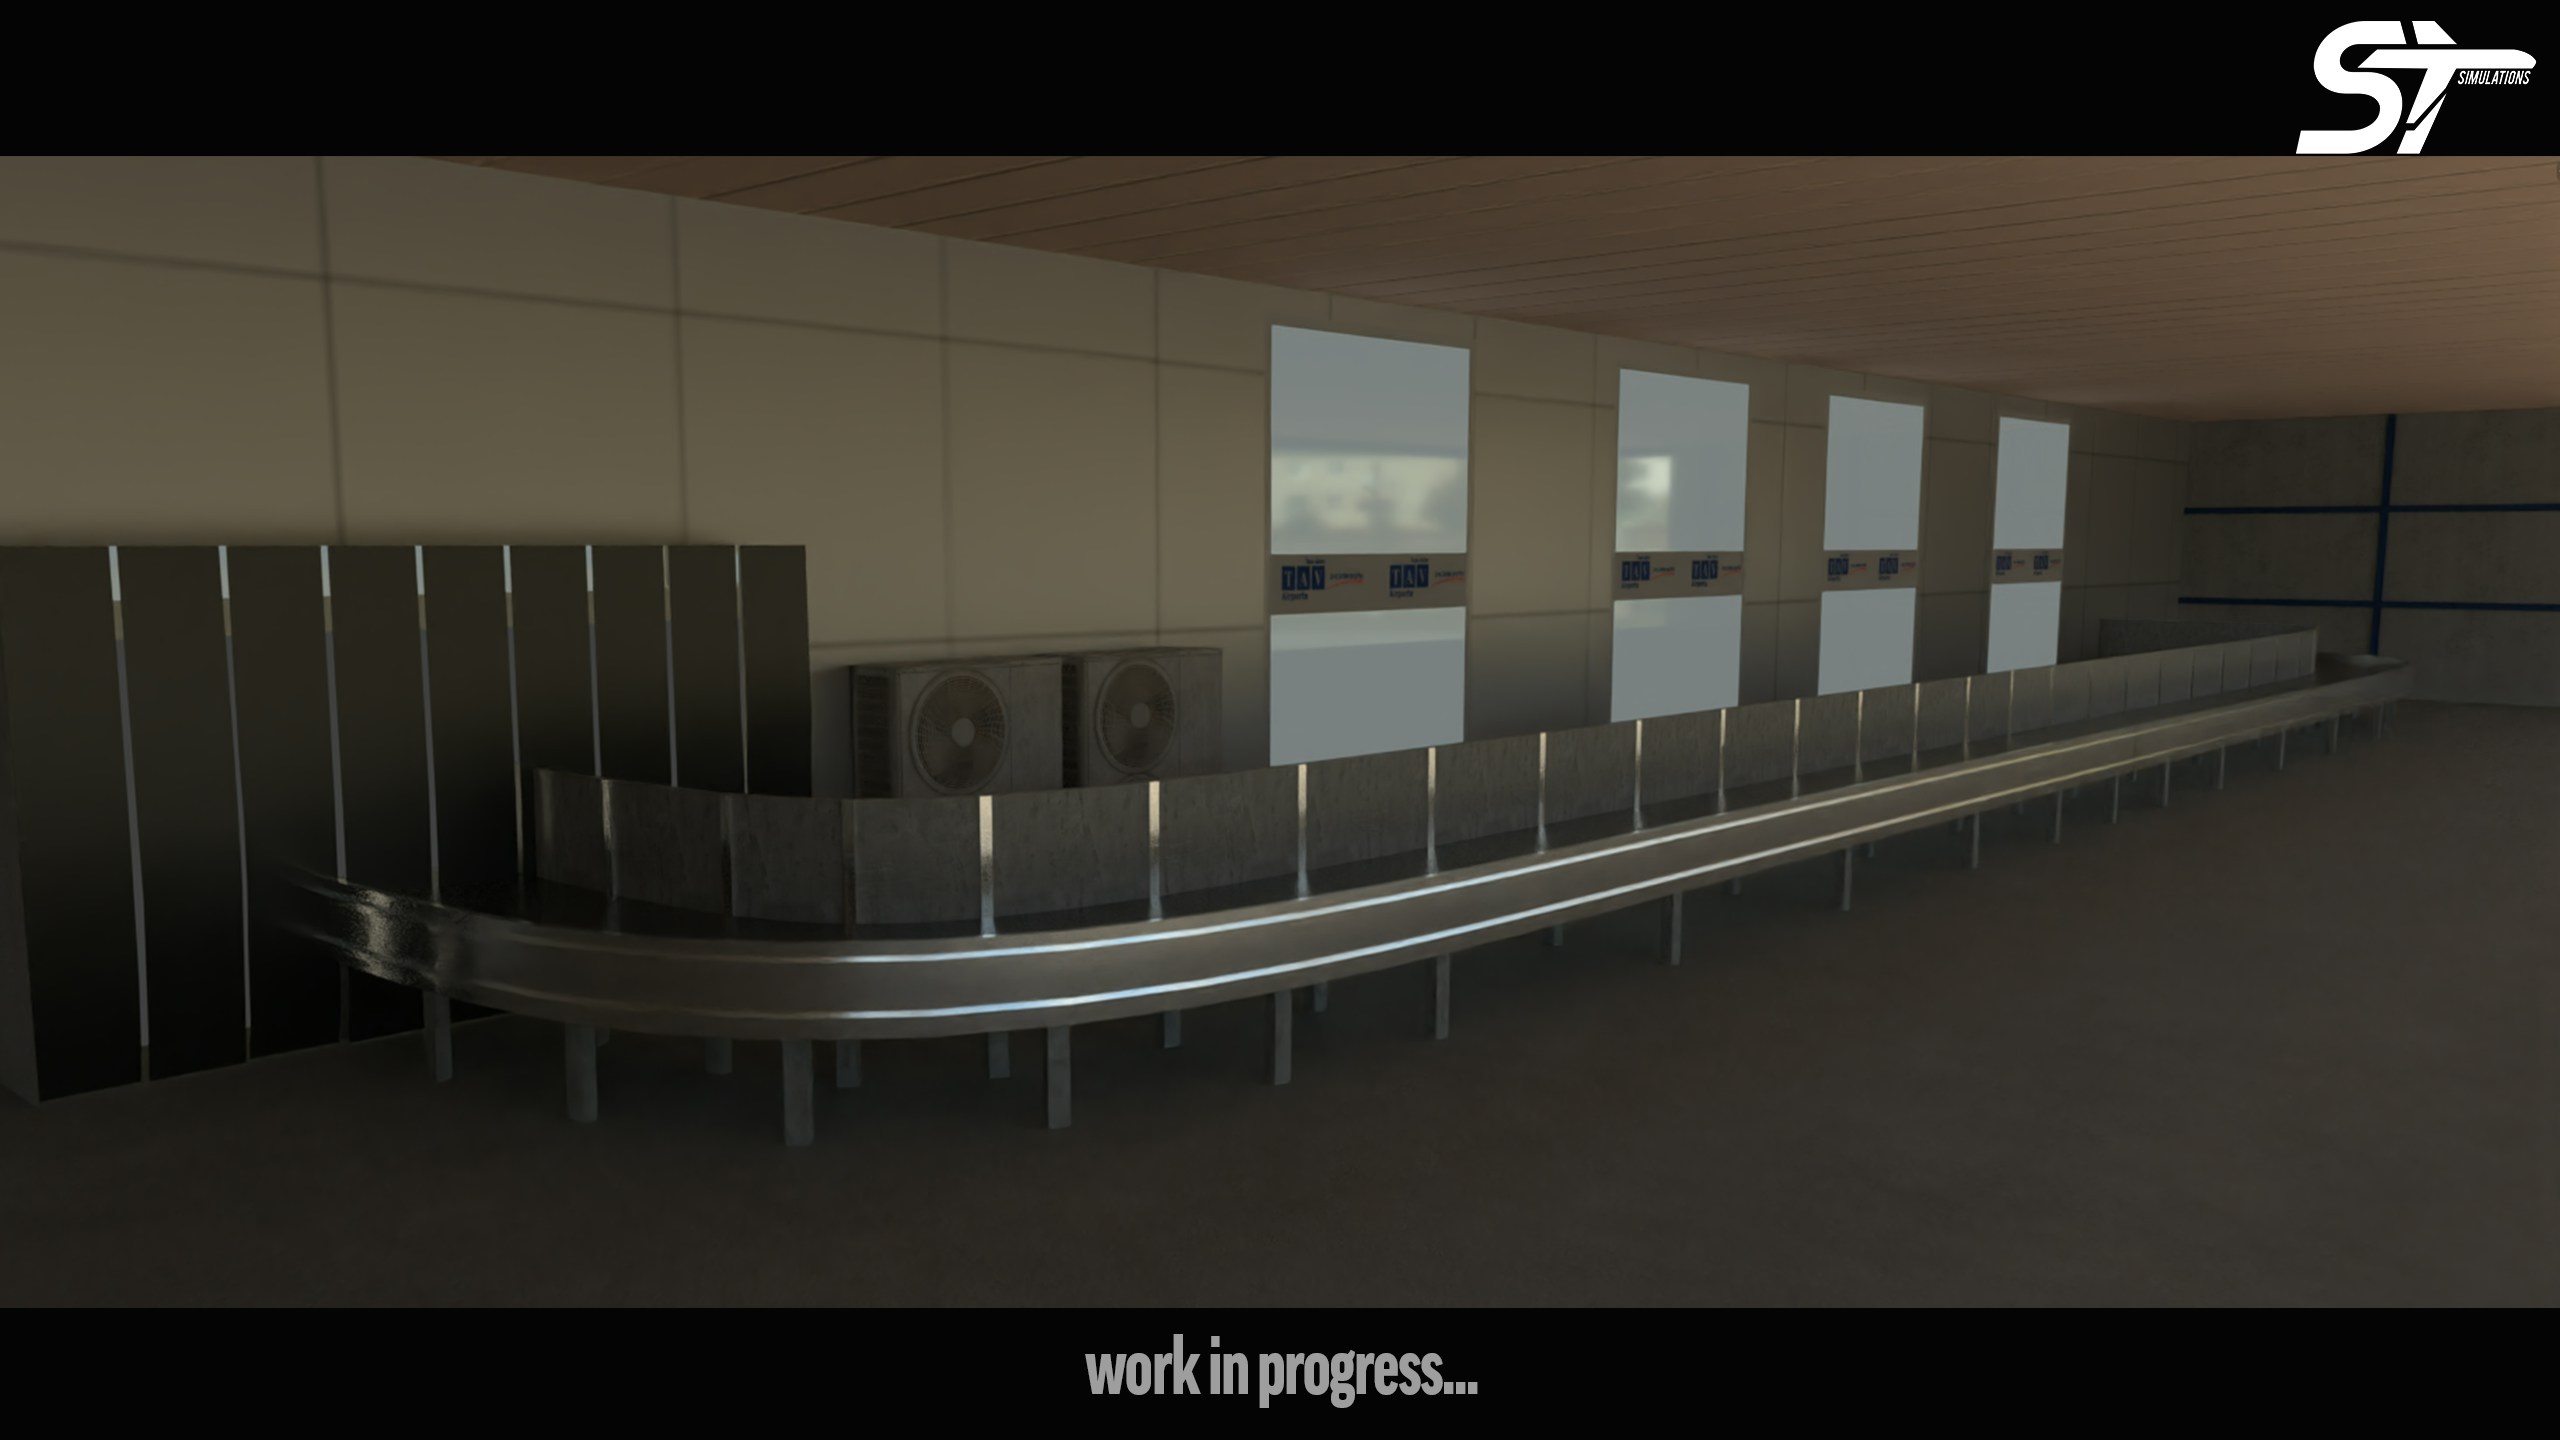 ST Simulations Announces Gazipasa-Alanya and Akureyri Airport